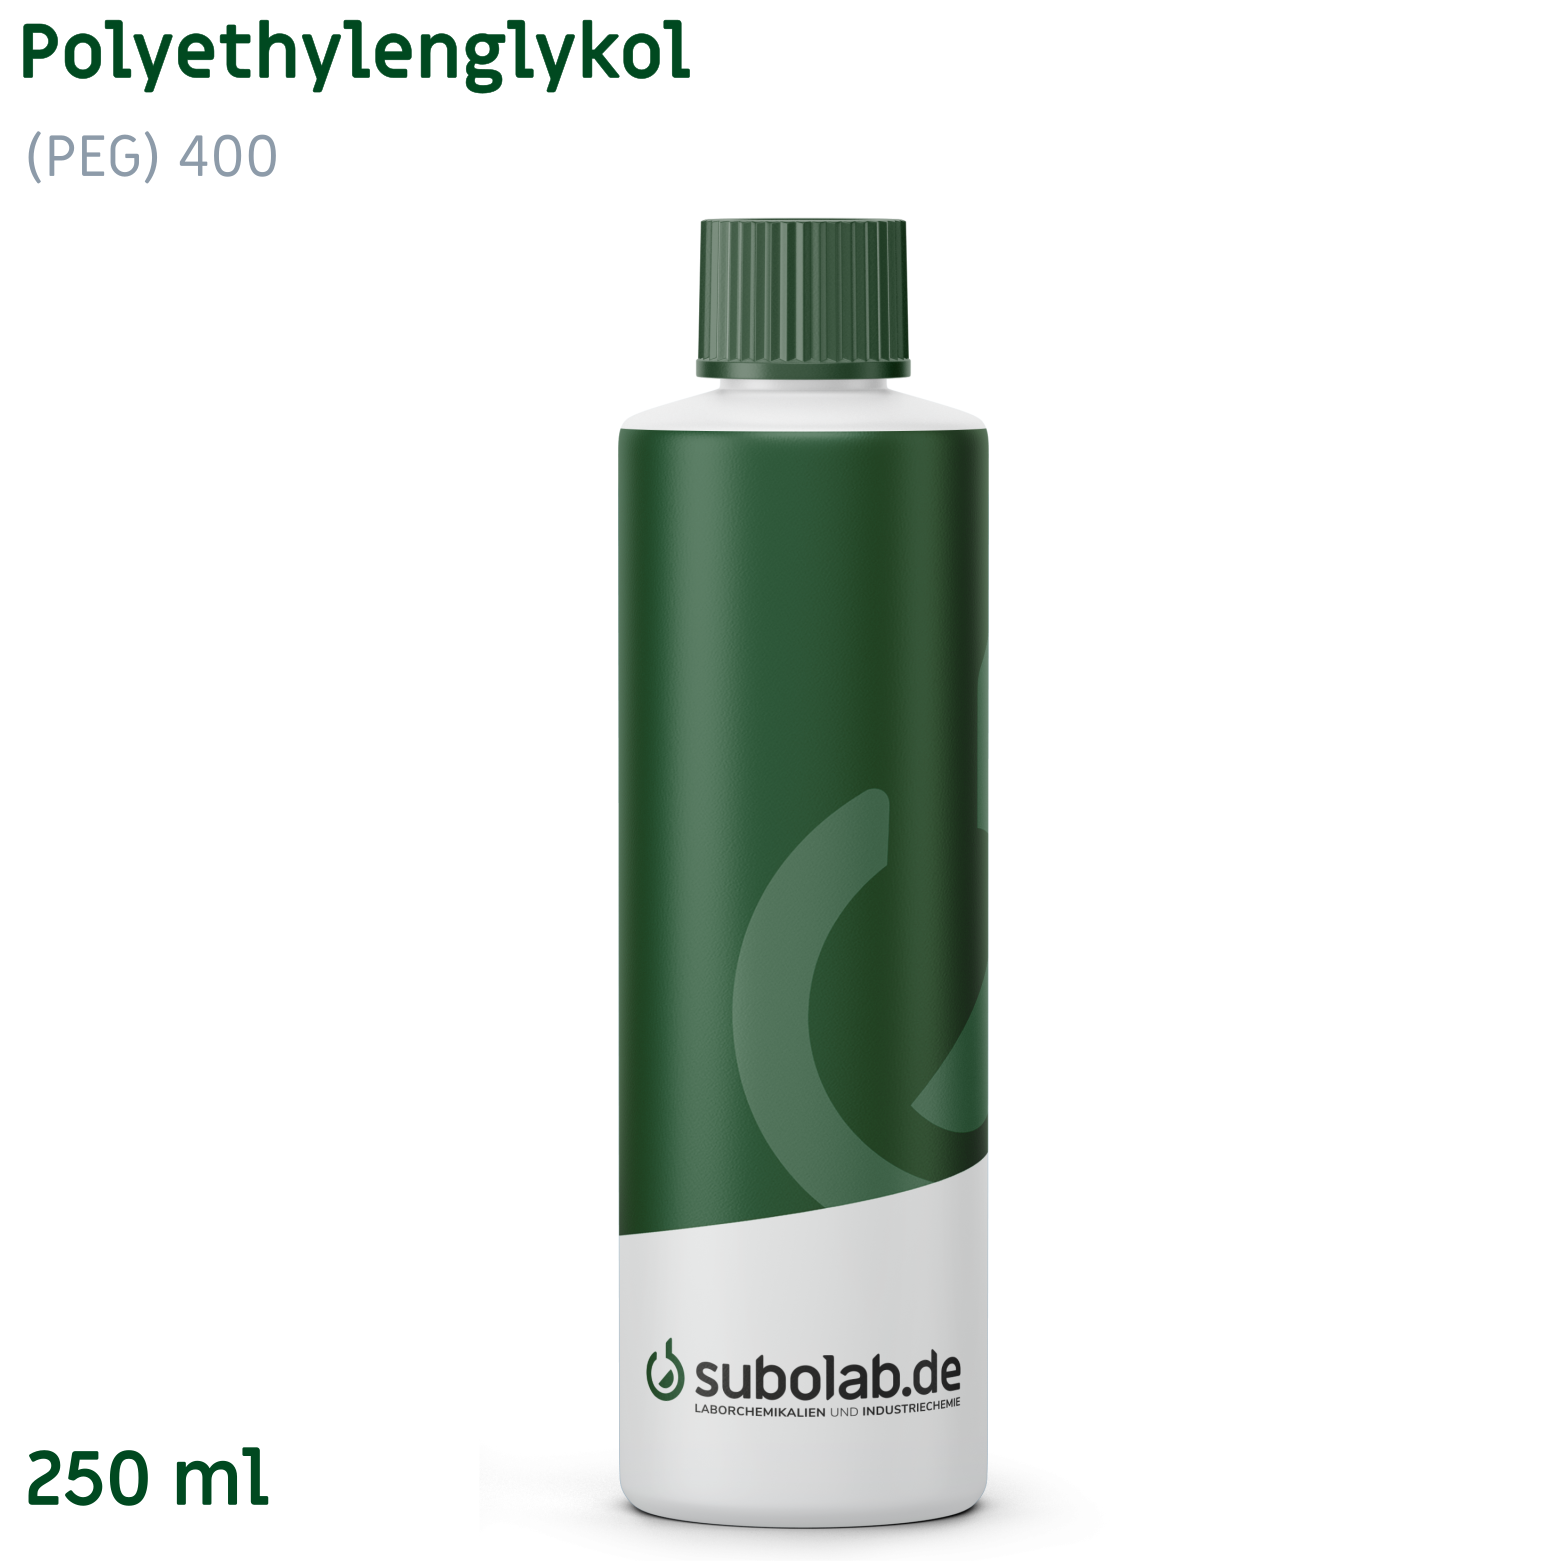 Bild von Polyethylenglykol (PEG) 400 (250 ml)